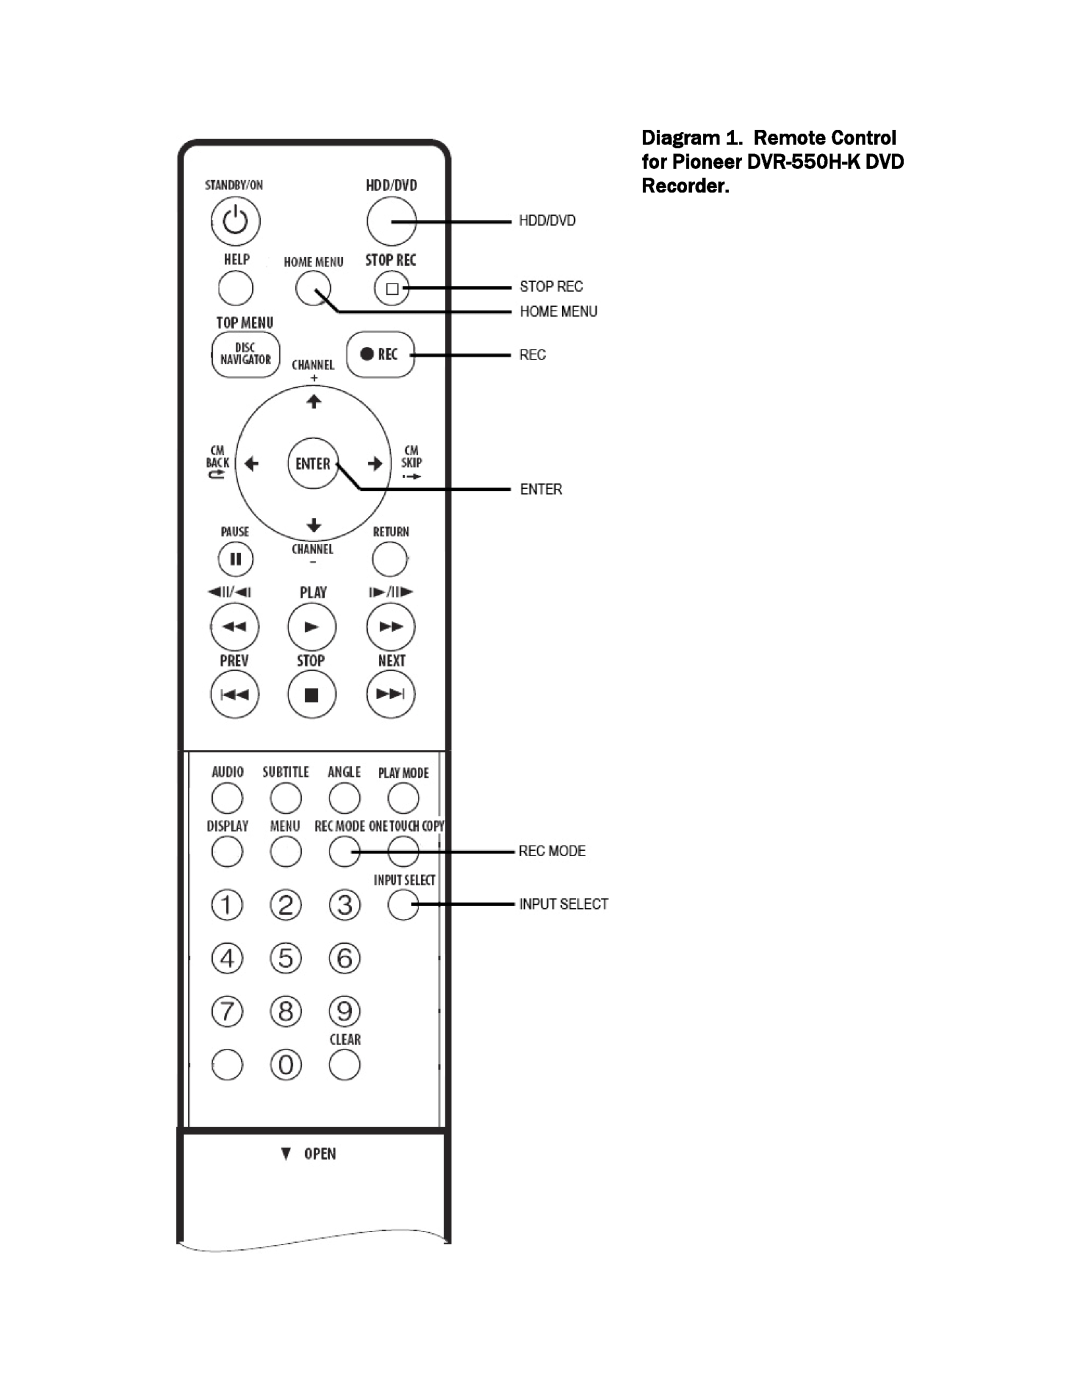 Pioneer manual Diagram 1. Remote Control for Pioneer DVR-550H-K DVD Recorder 